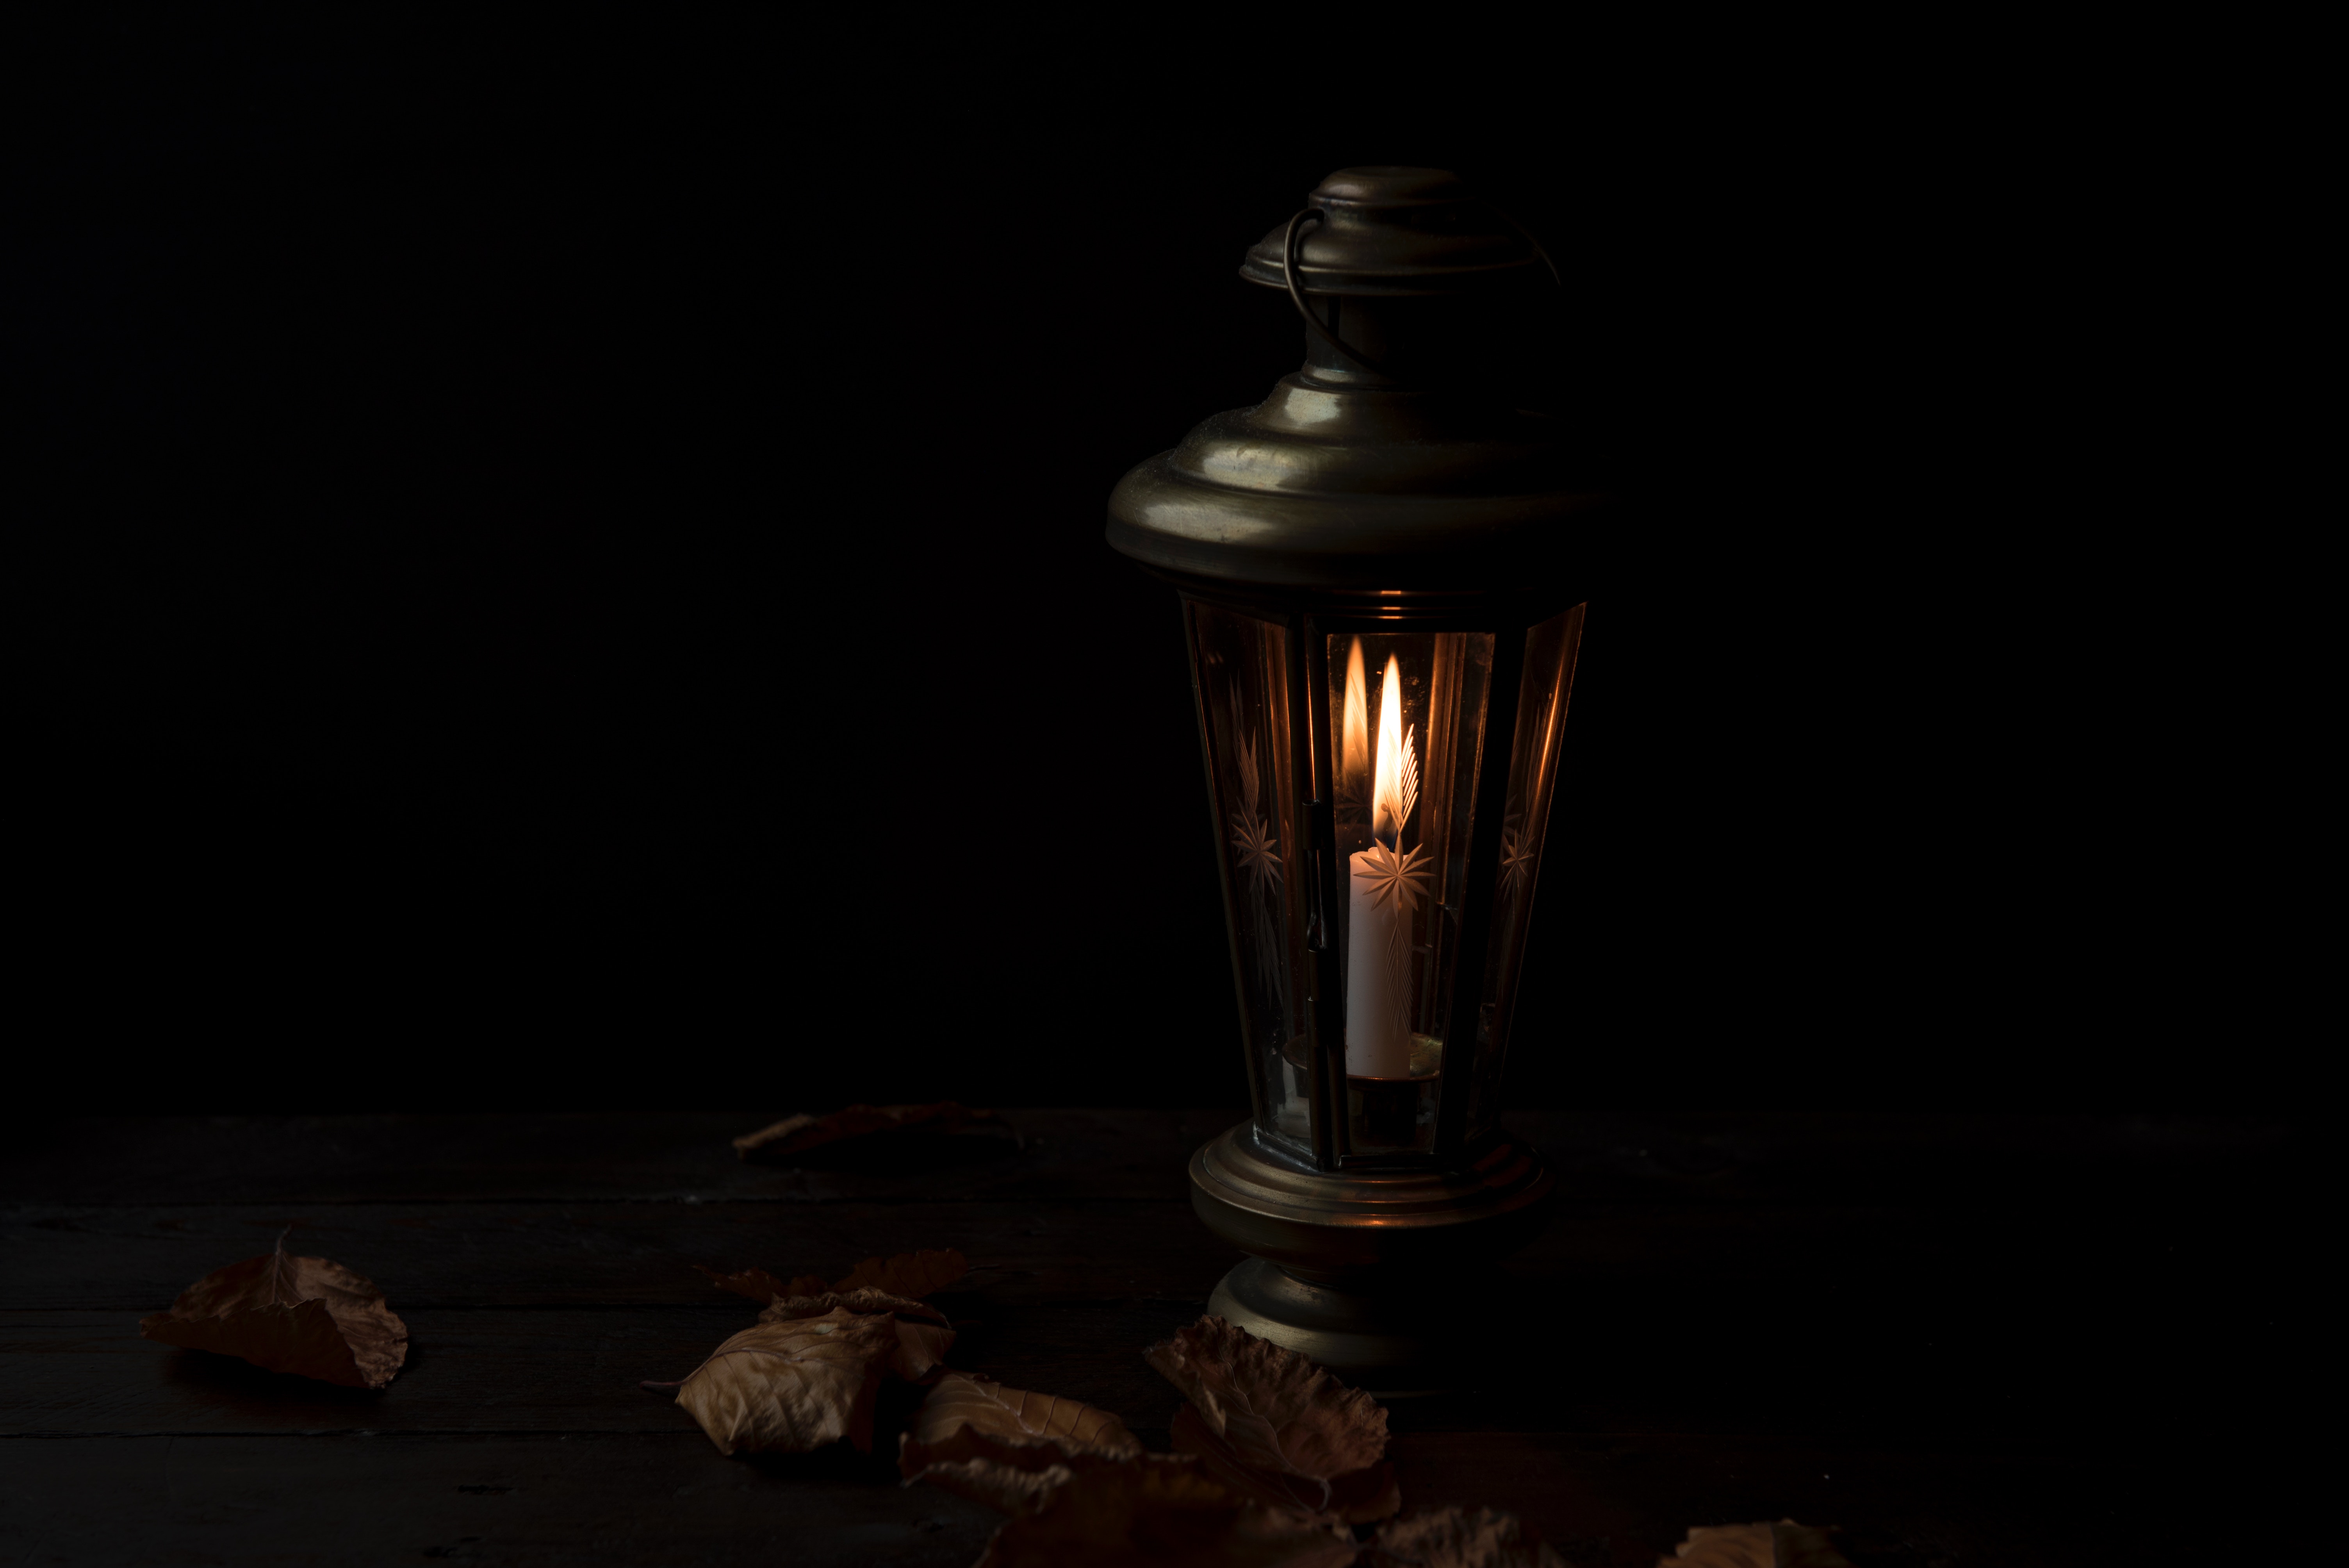 night, candle, dark, lamp iphone wallpaper